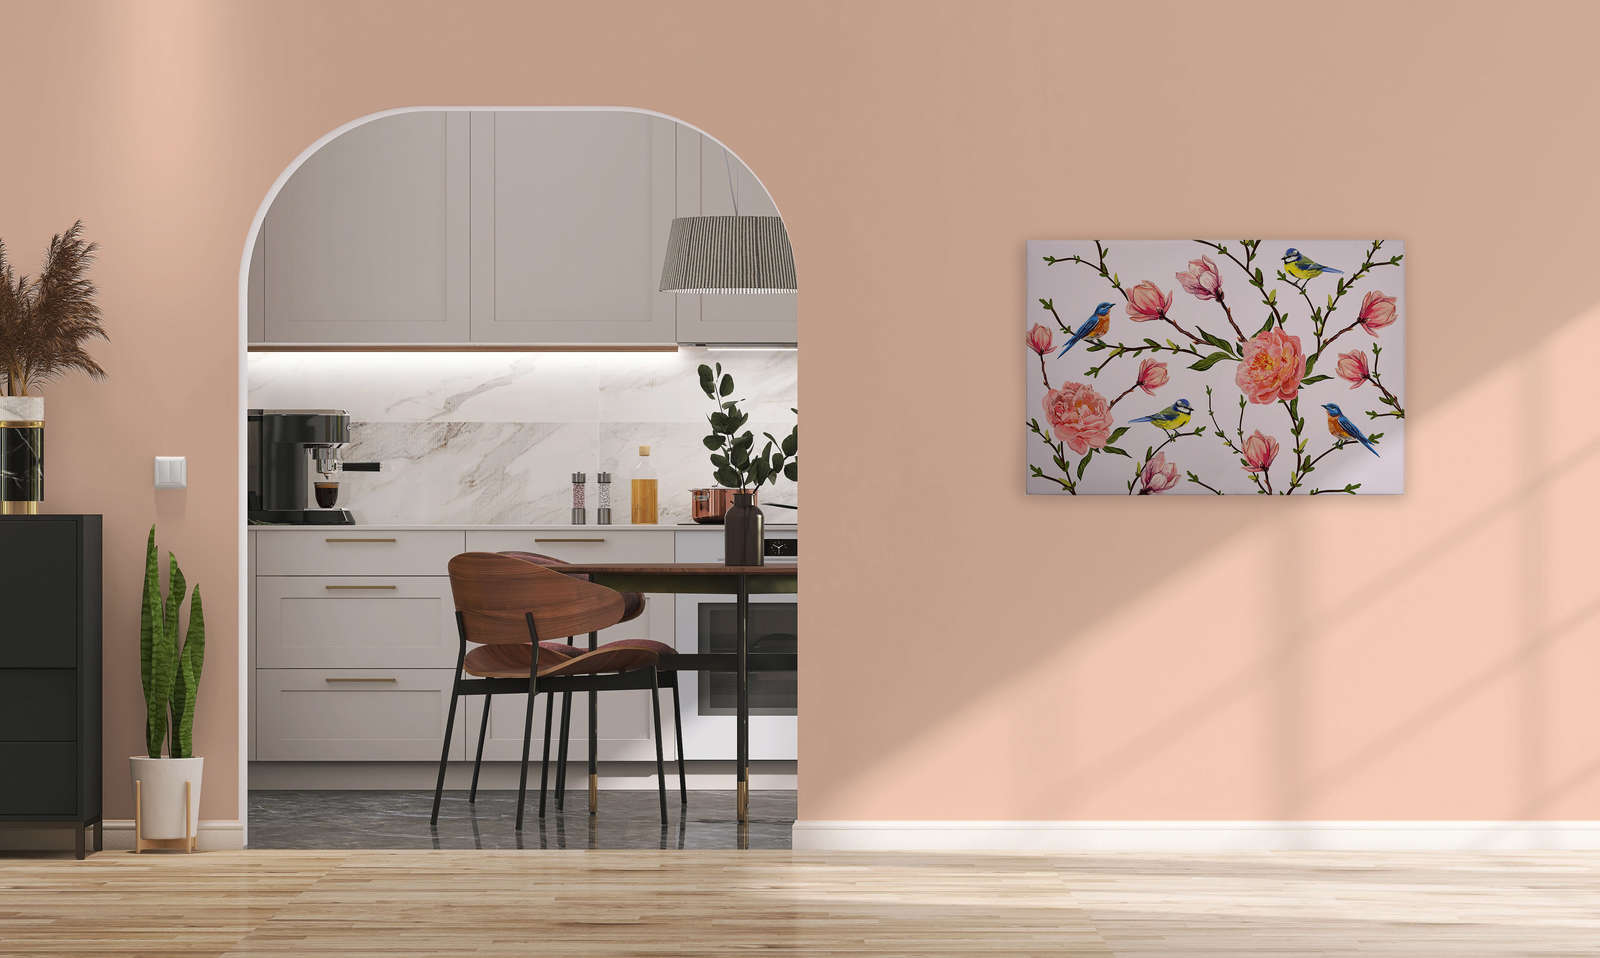             Canvas Birds & Flowers minimalist - 0.90 m x 0.60 m
        